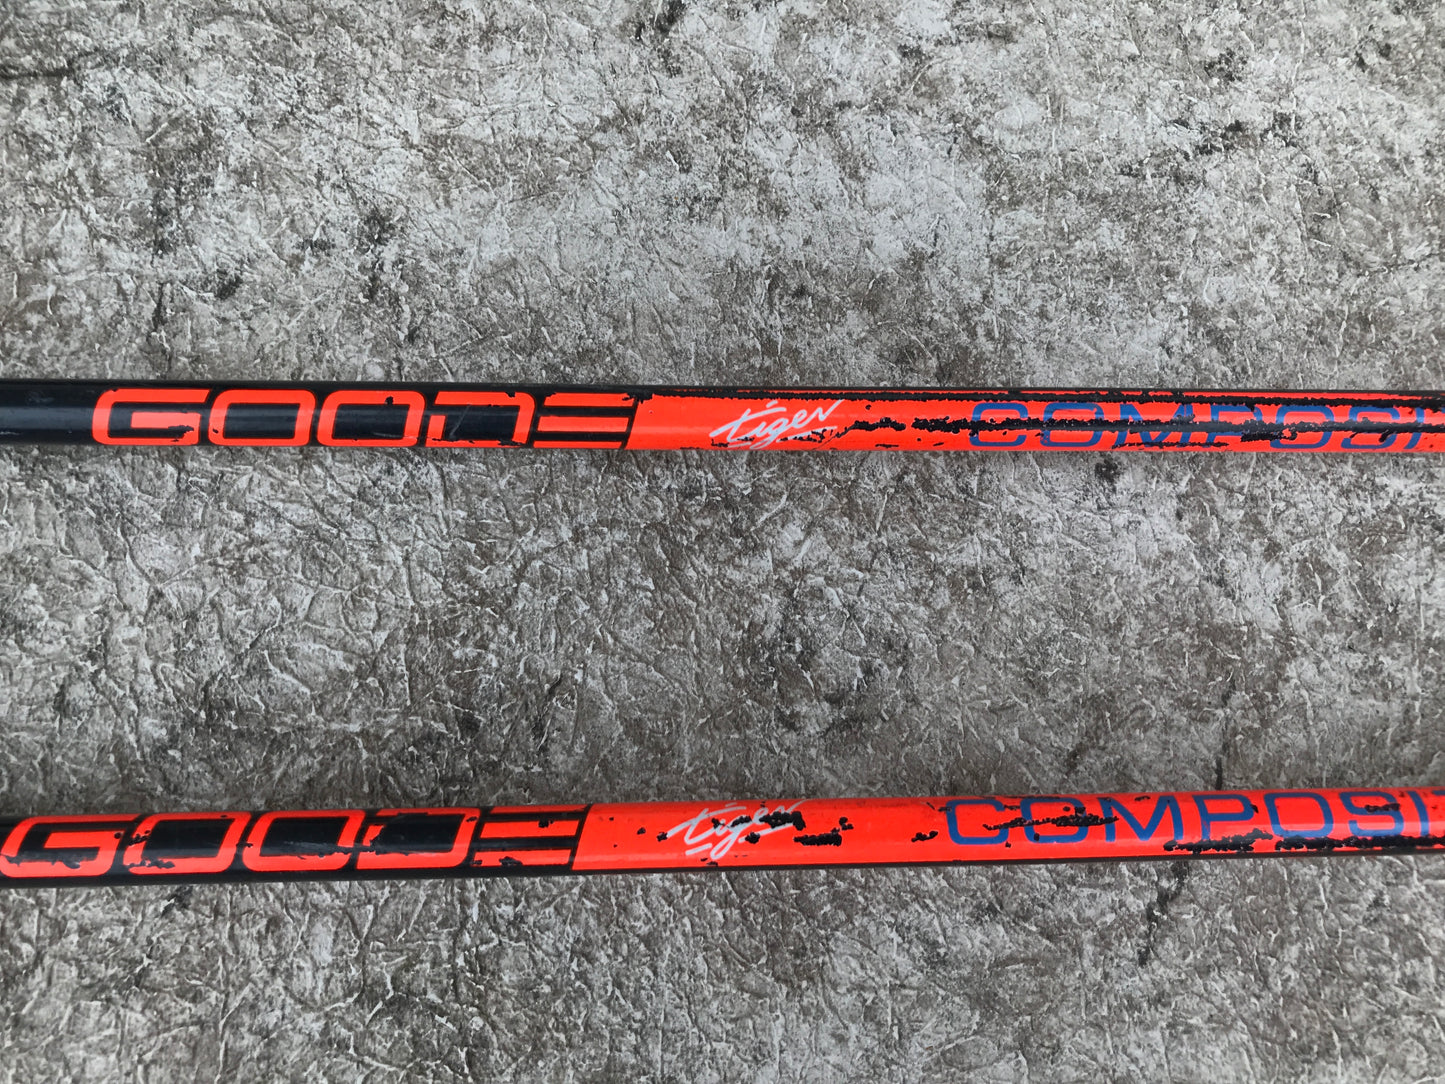 Ski Poles Child Size 44 inch Composite Black Tangerine